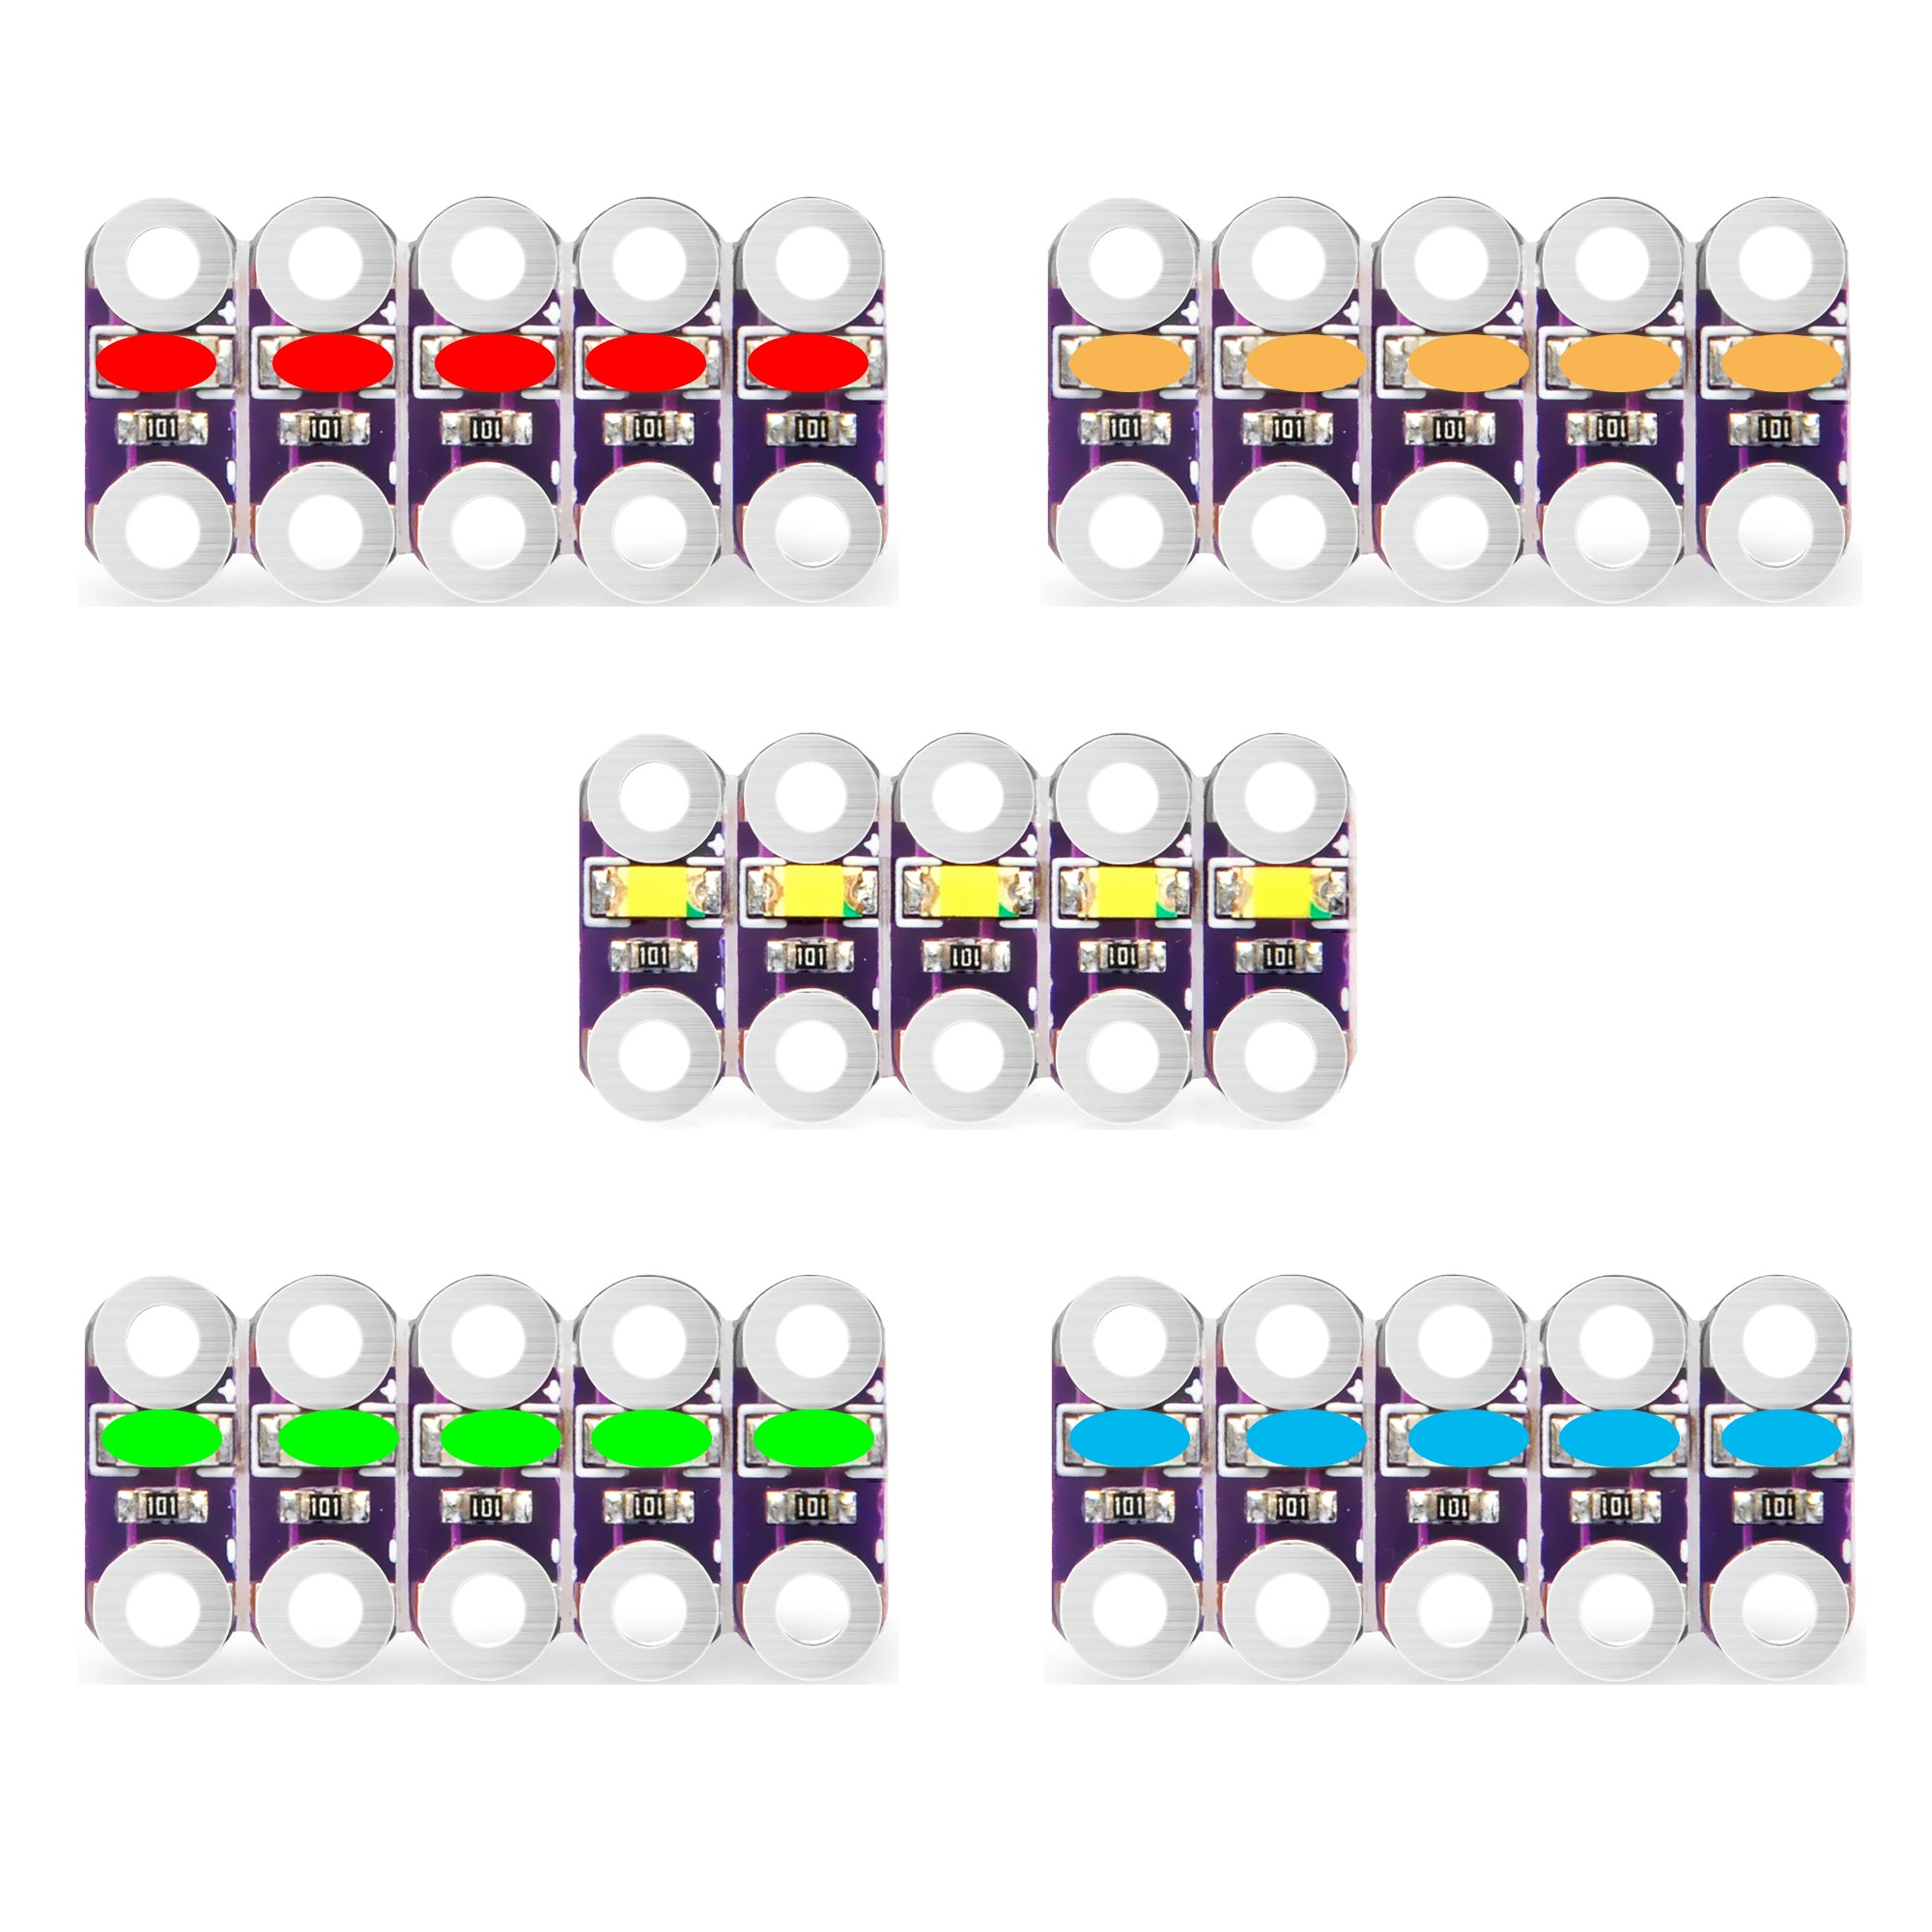 KOOKYE Lilypad LED Rouge/Jaune/Blanc/Bleu/Vert (25x Lilypad LED) pour Arduino Rapsberry Pi (25x Lilypad LED)